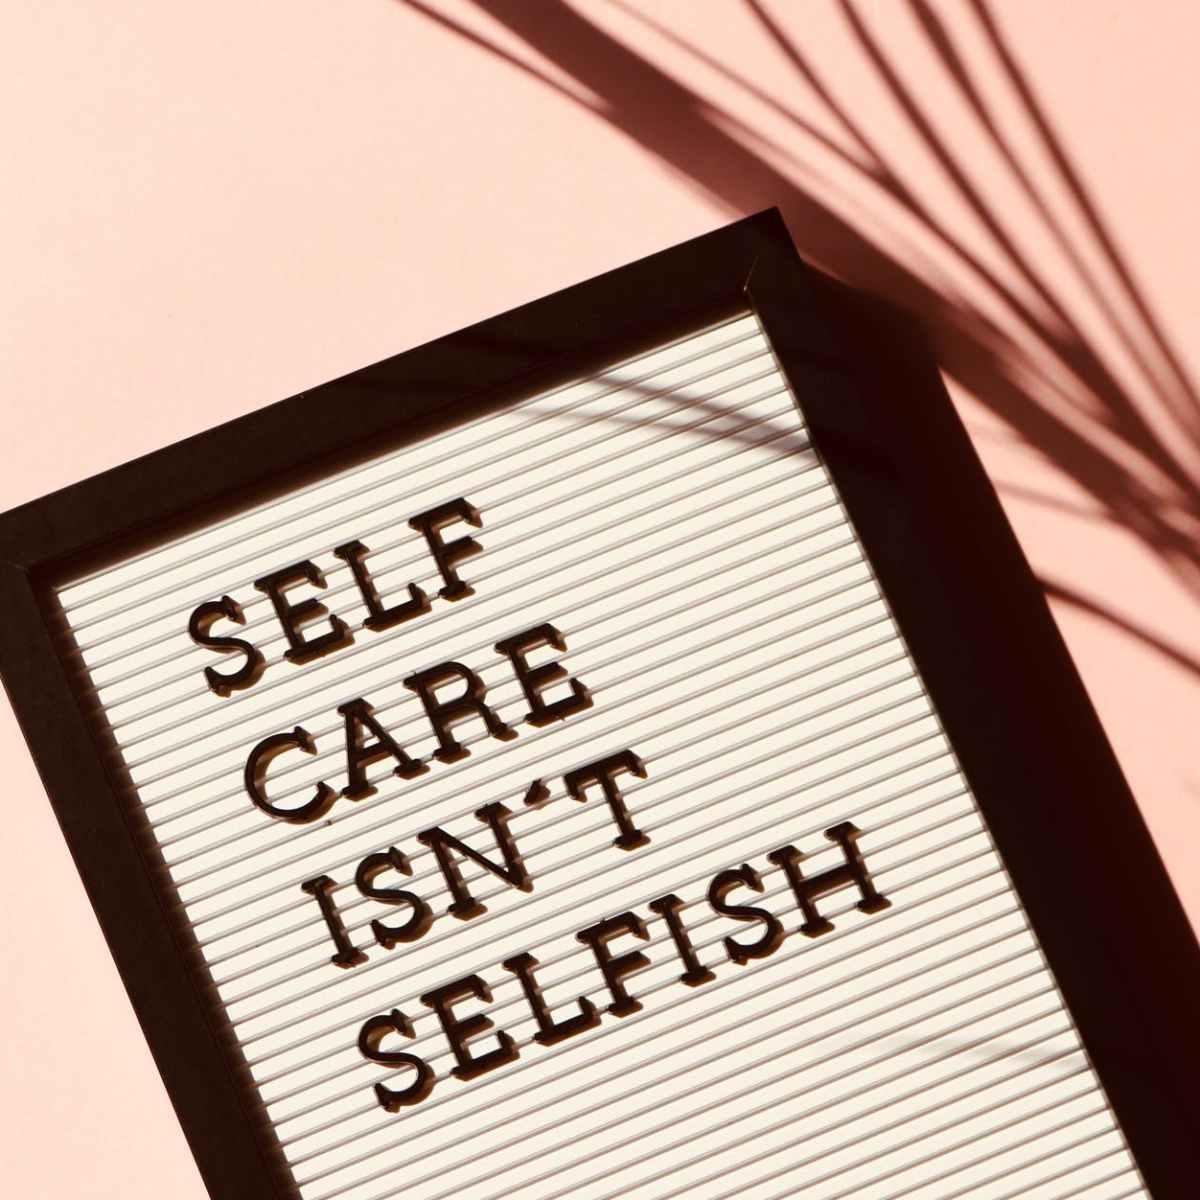 Self care – it’s a necessity